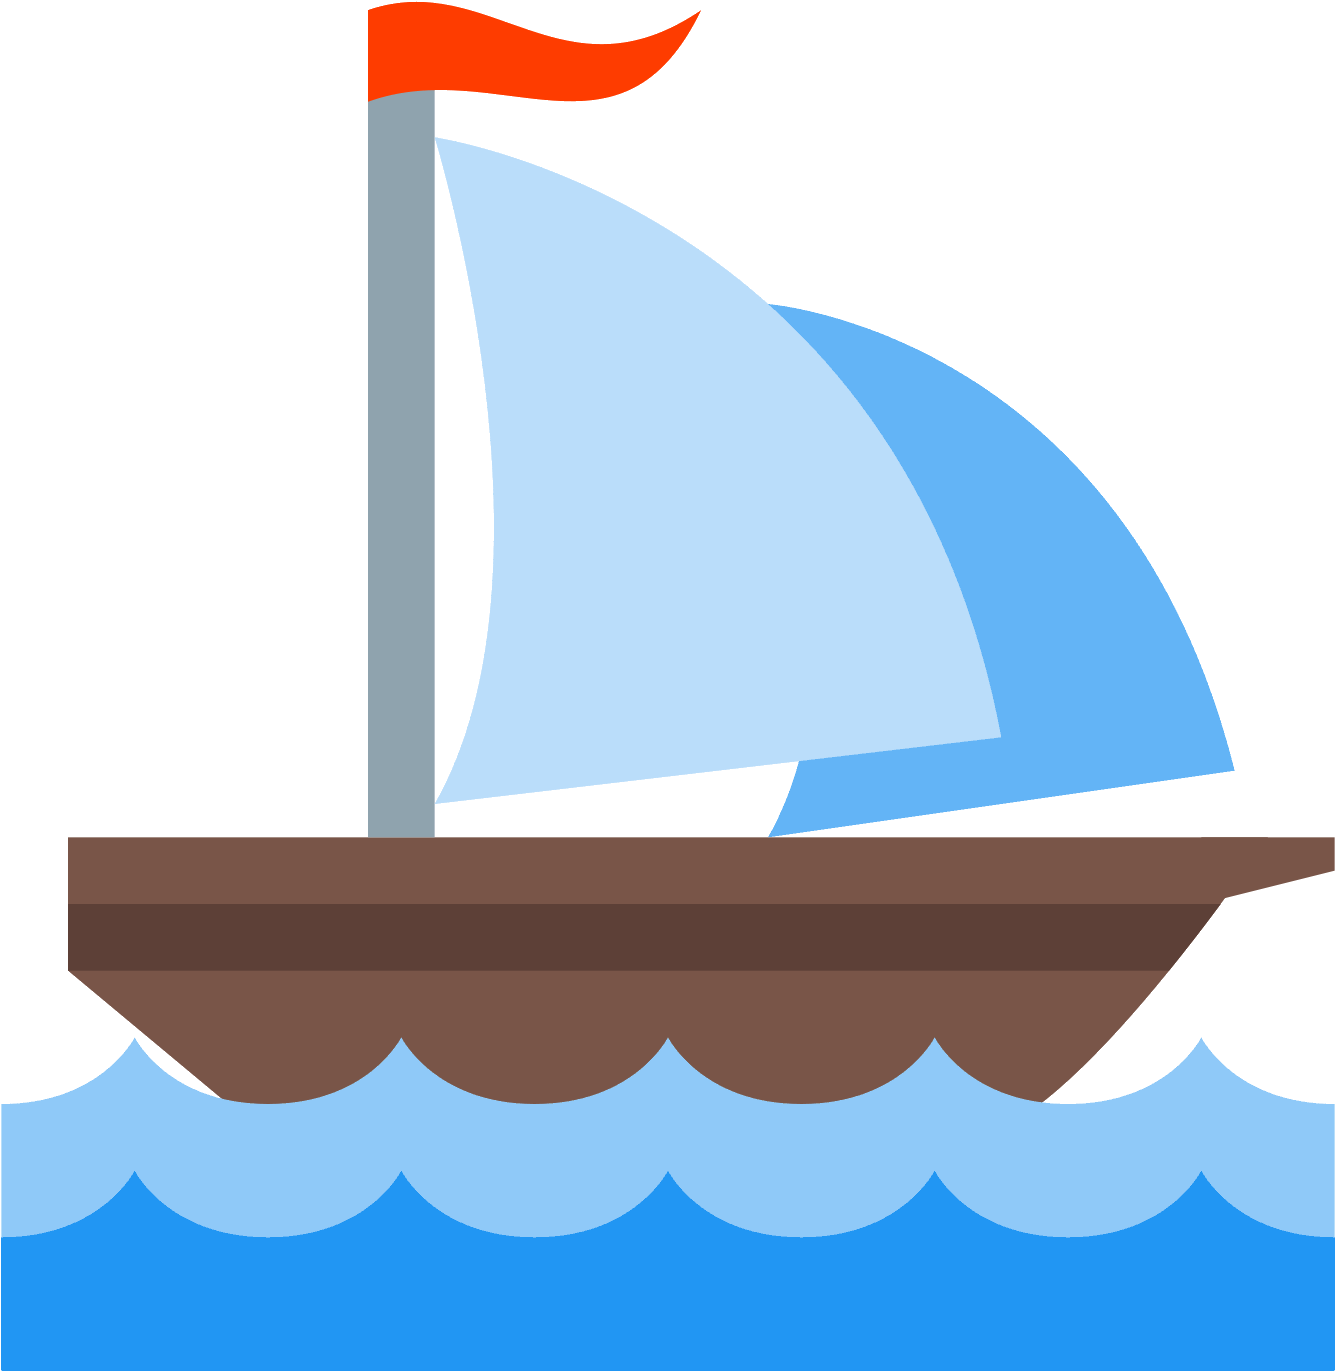 Sailboat Vector Illustration PNG image